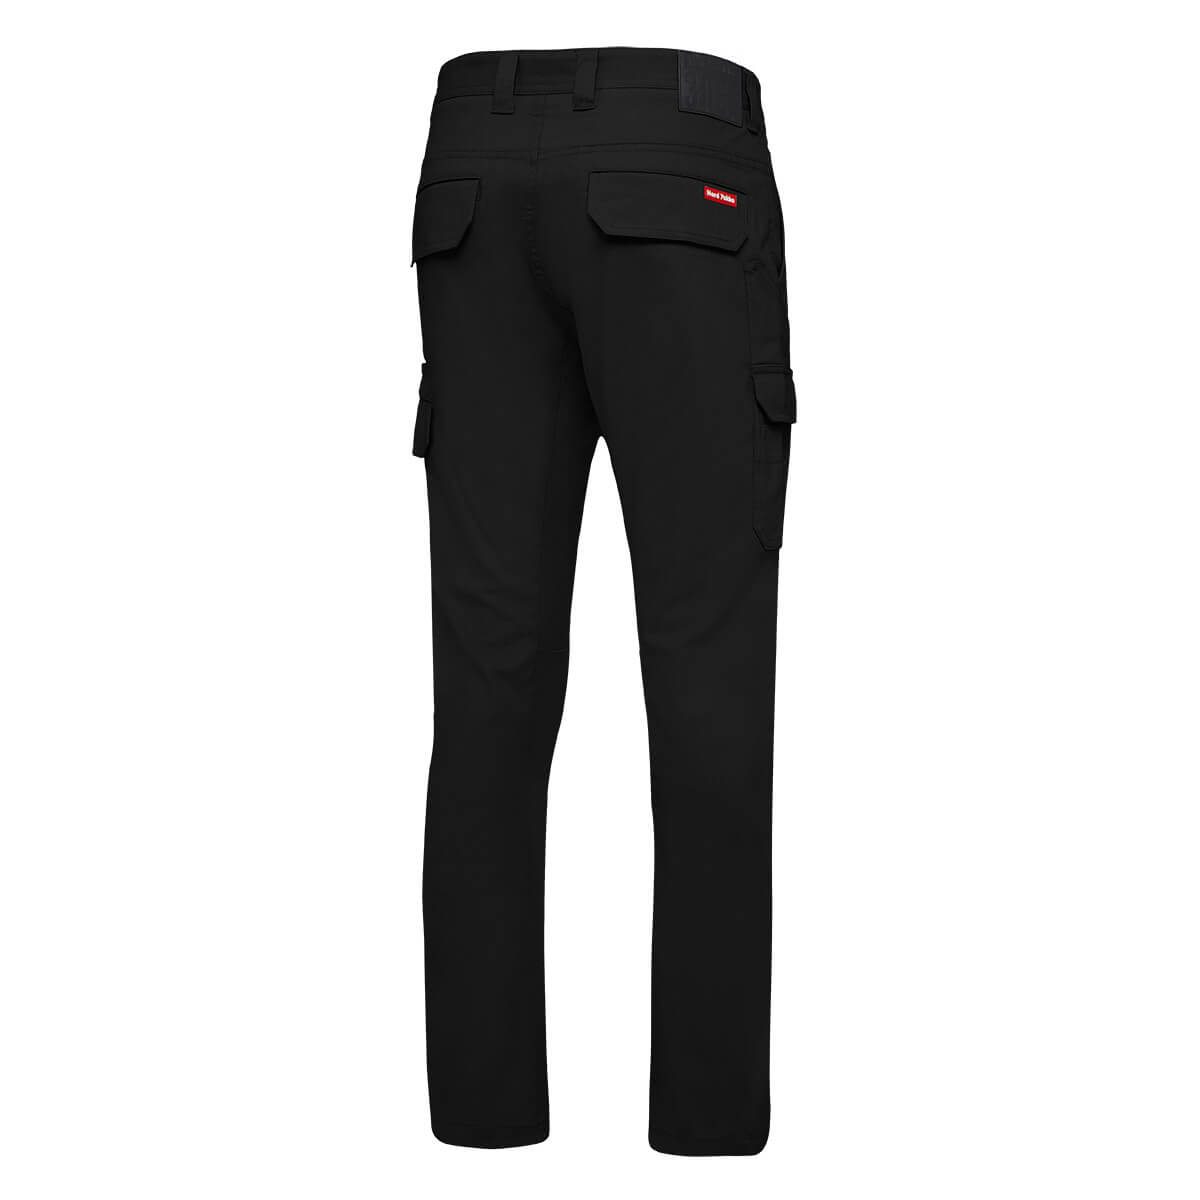 Hard Yakka  Stretch Ripstop Cargo Pants 3056  Black  Site Ware Direct   Workwear PPE  Safety Gear Suppliers  Australia Wide